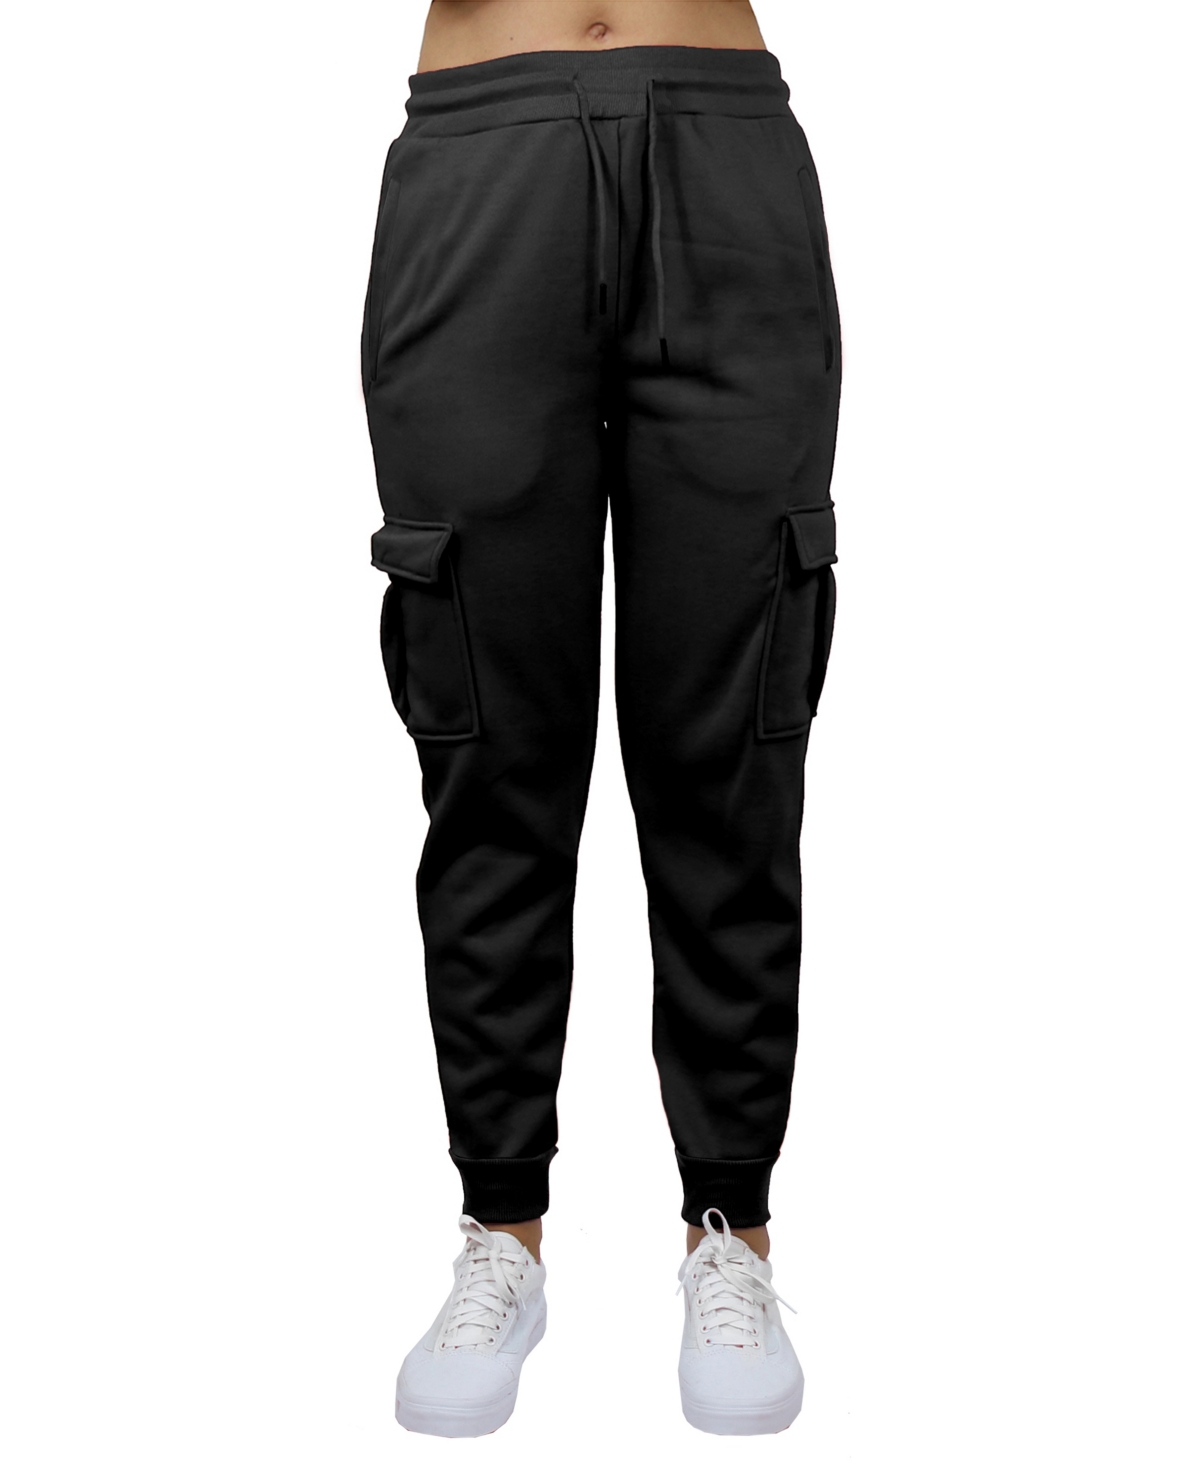 Women's Heavyweight Loose Fit Fleece Lined Cargo Jogger Pants - Black